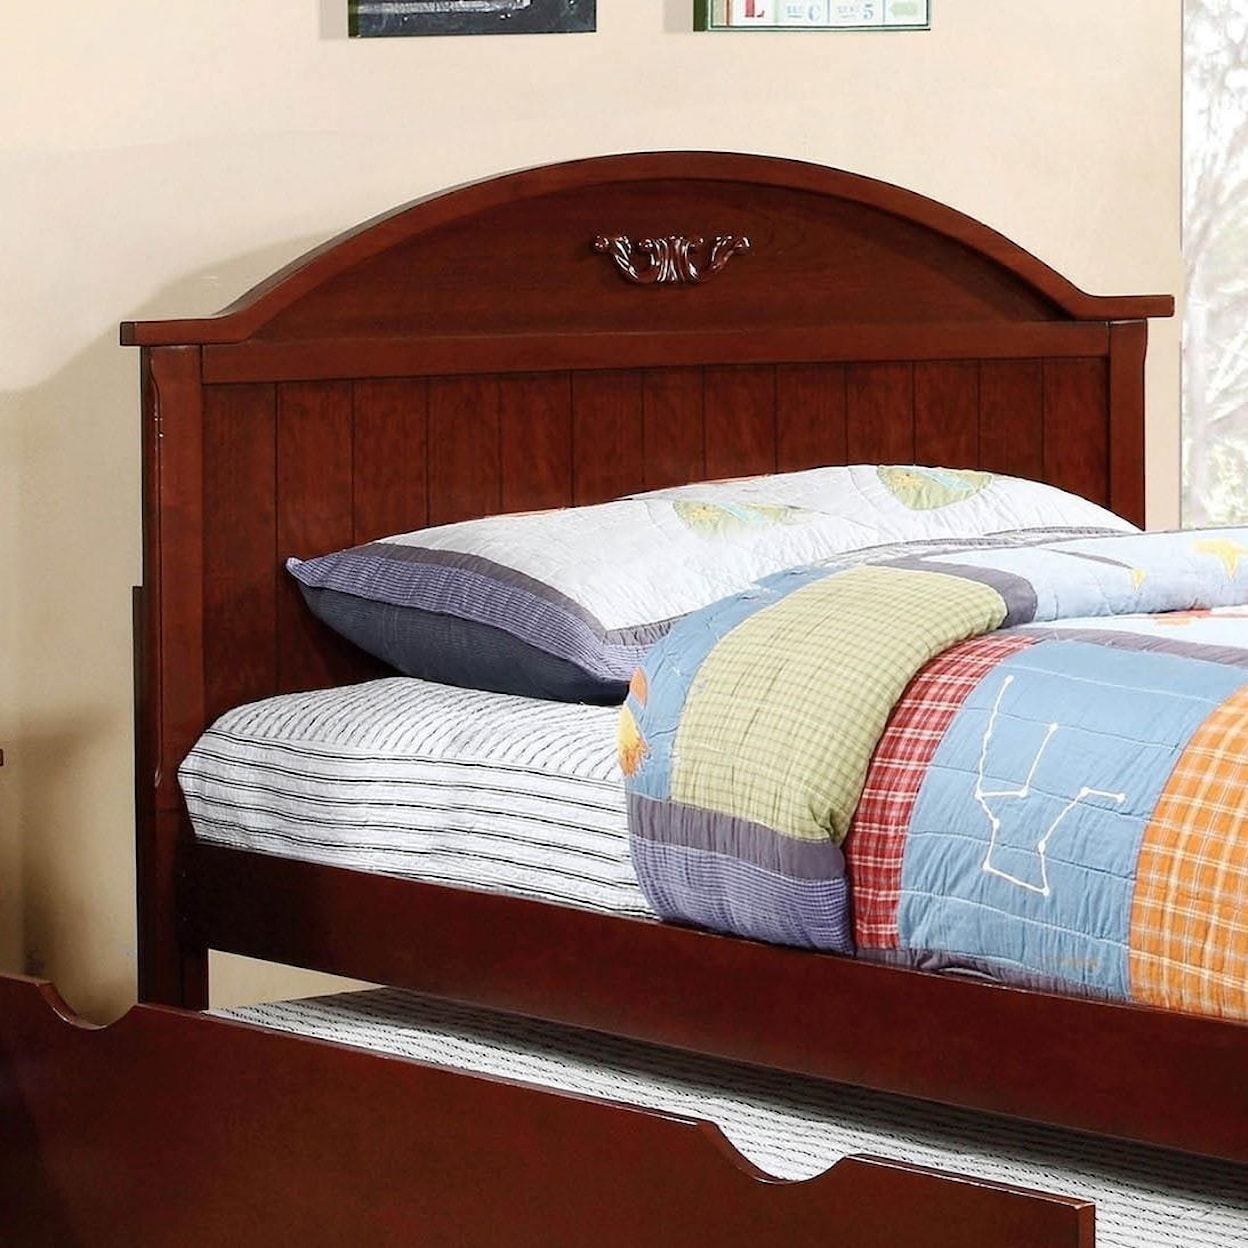 Furniture of America - FOA Medina Full Bed